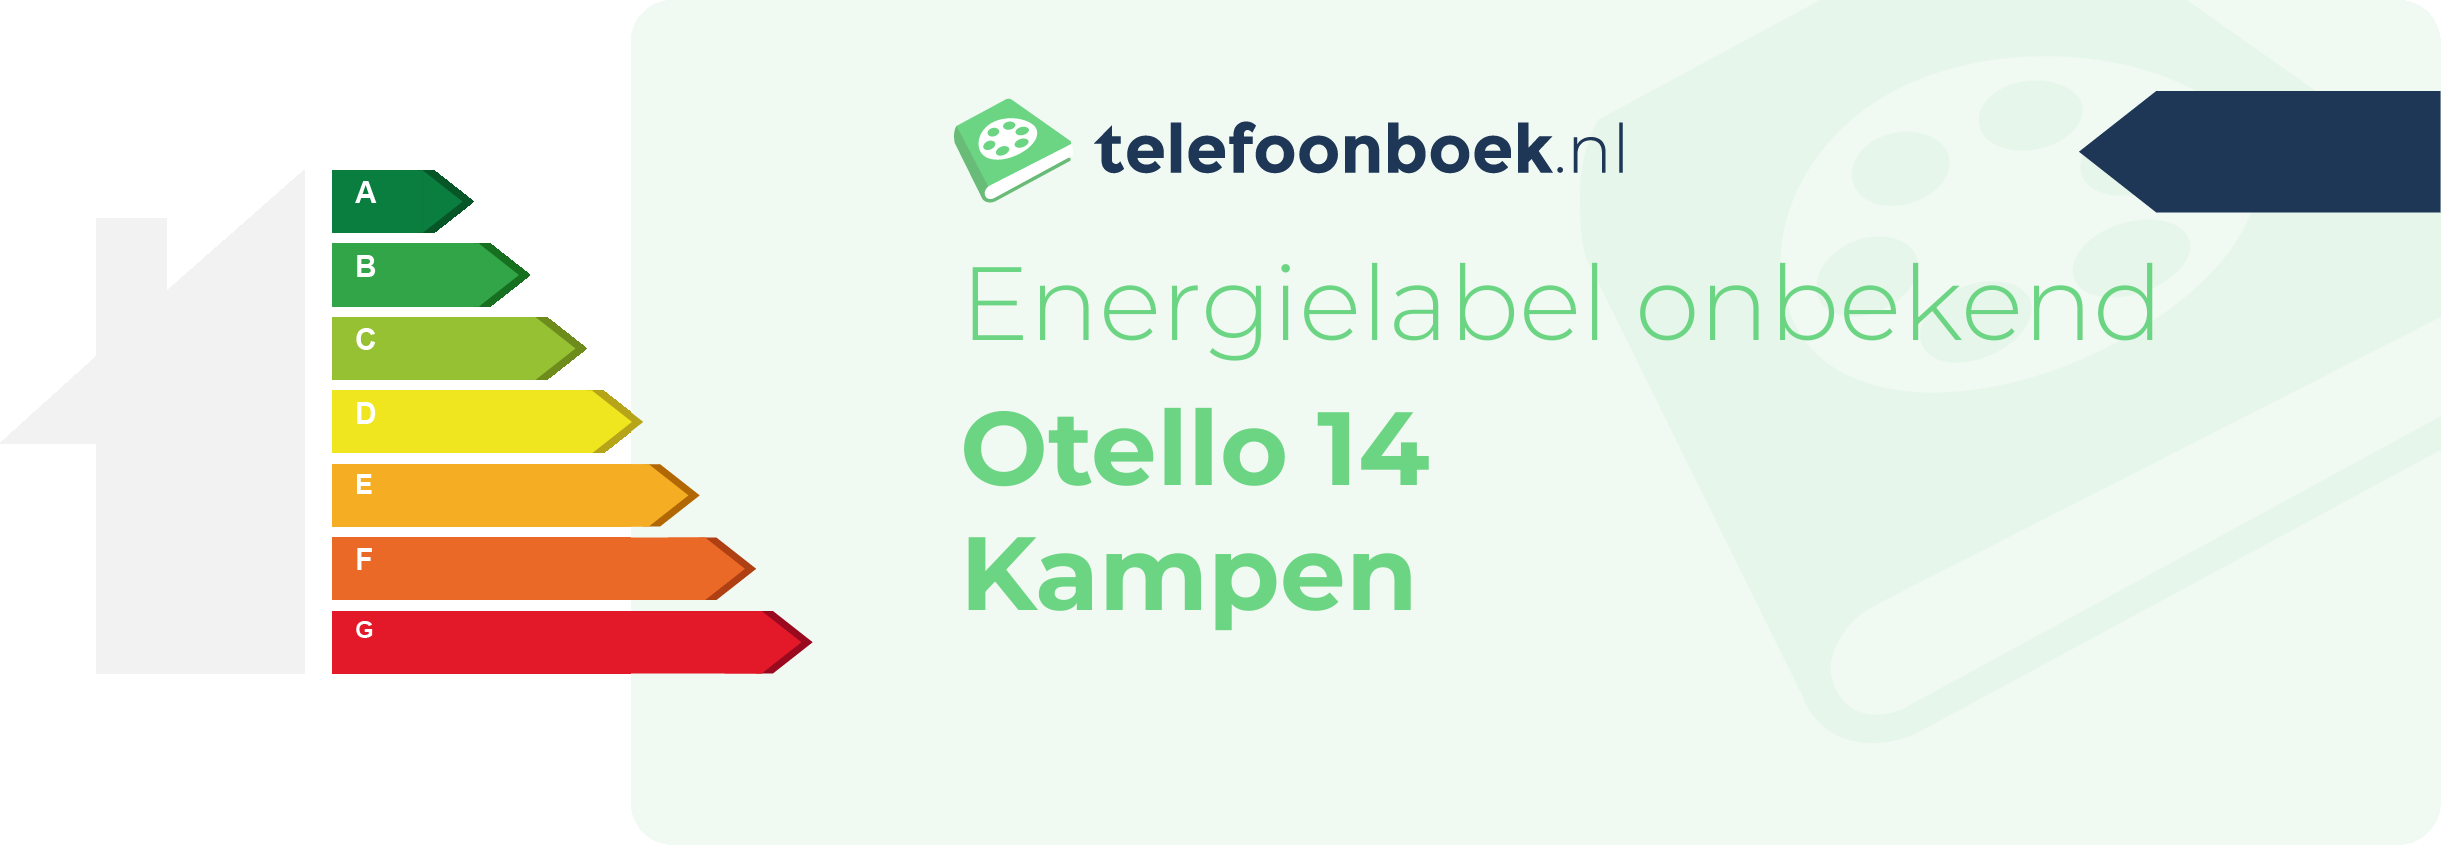 Energielabel Otello 14 Kampen